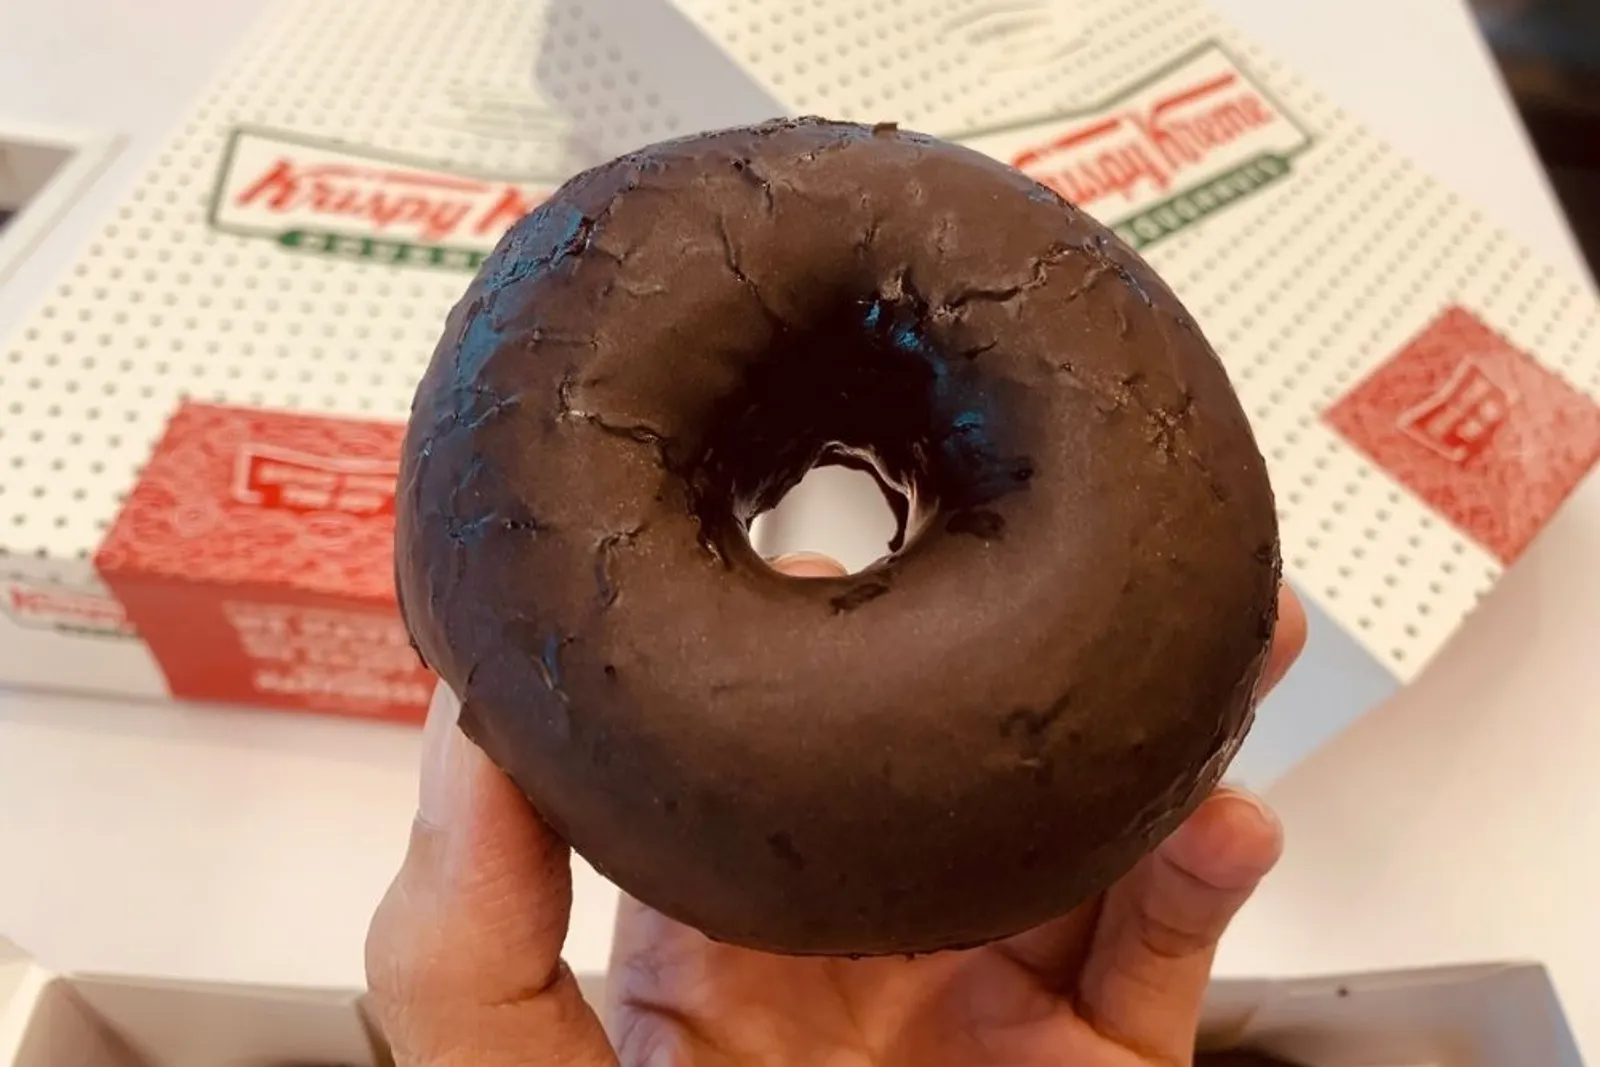 Berlimpah Cokelat, Krispy Kreme Luncurkan Chocolate Glazed Doughnuts